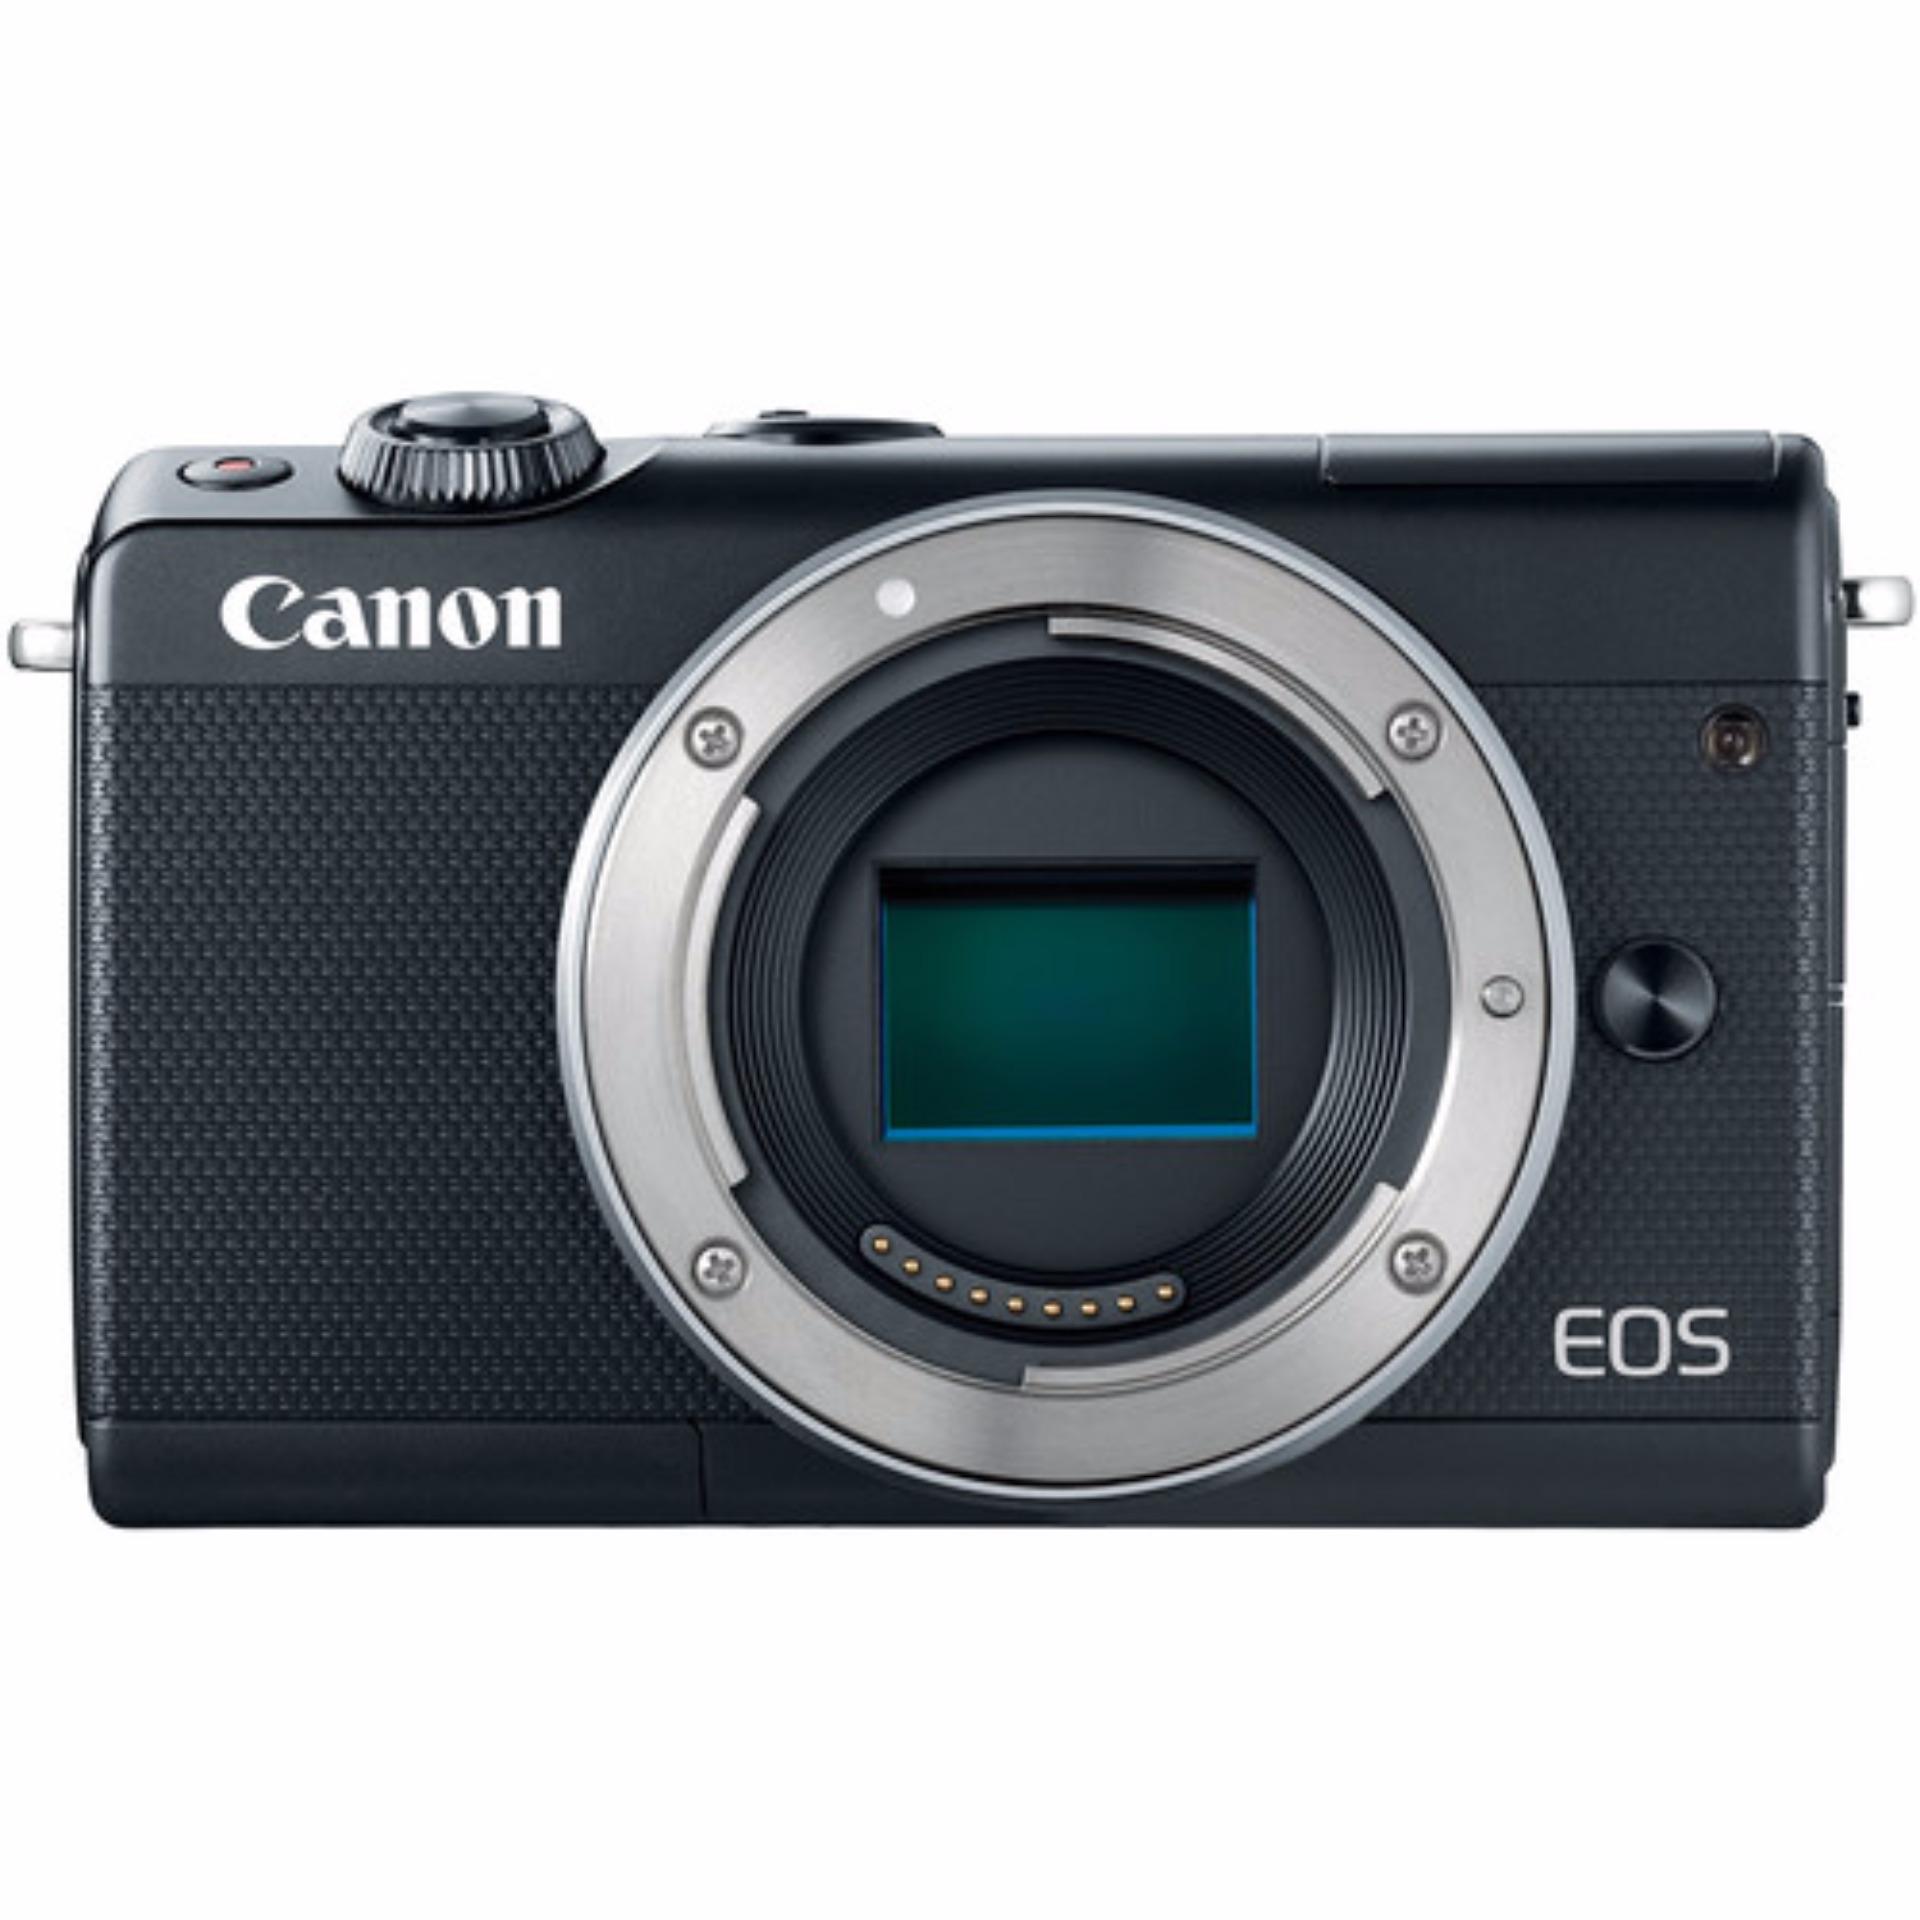 Canon EOS M100 15-45mm Kit (Black) (FREE 16GB SD Card)